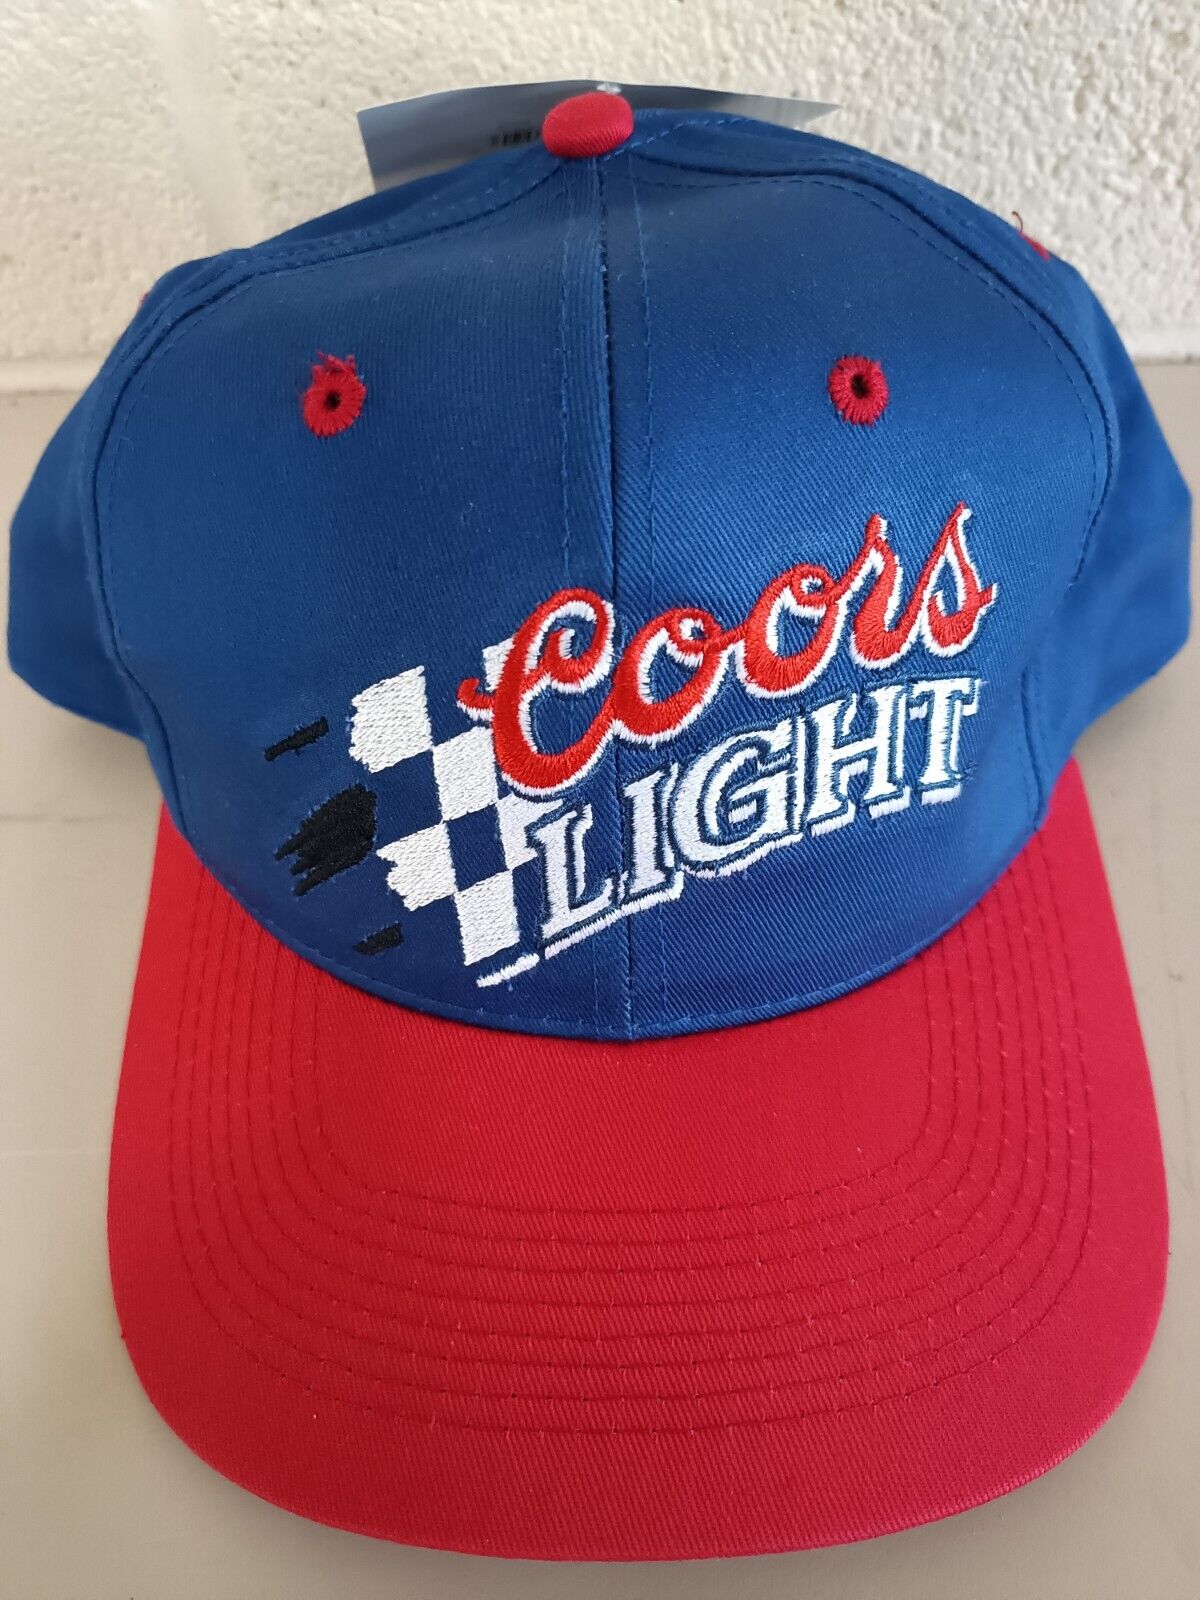 Vintage 1997 Coors Light Snap-Back Trucker Hat Cap One Size Adjustable Strap